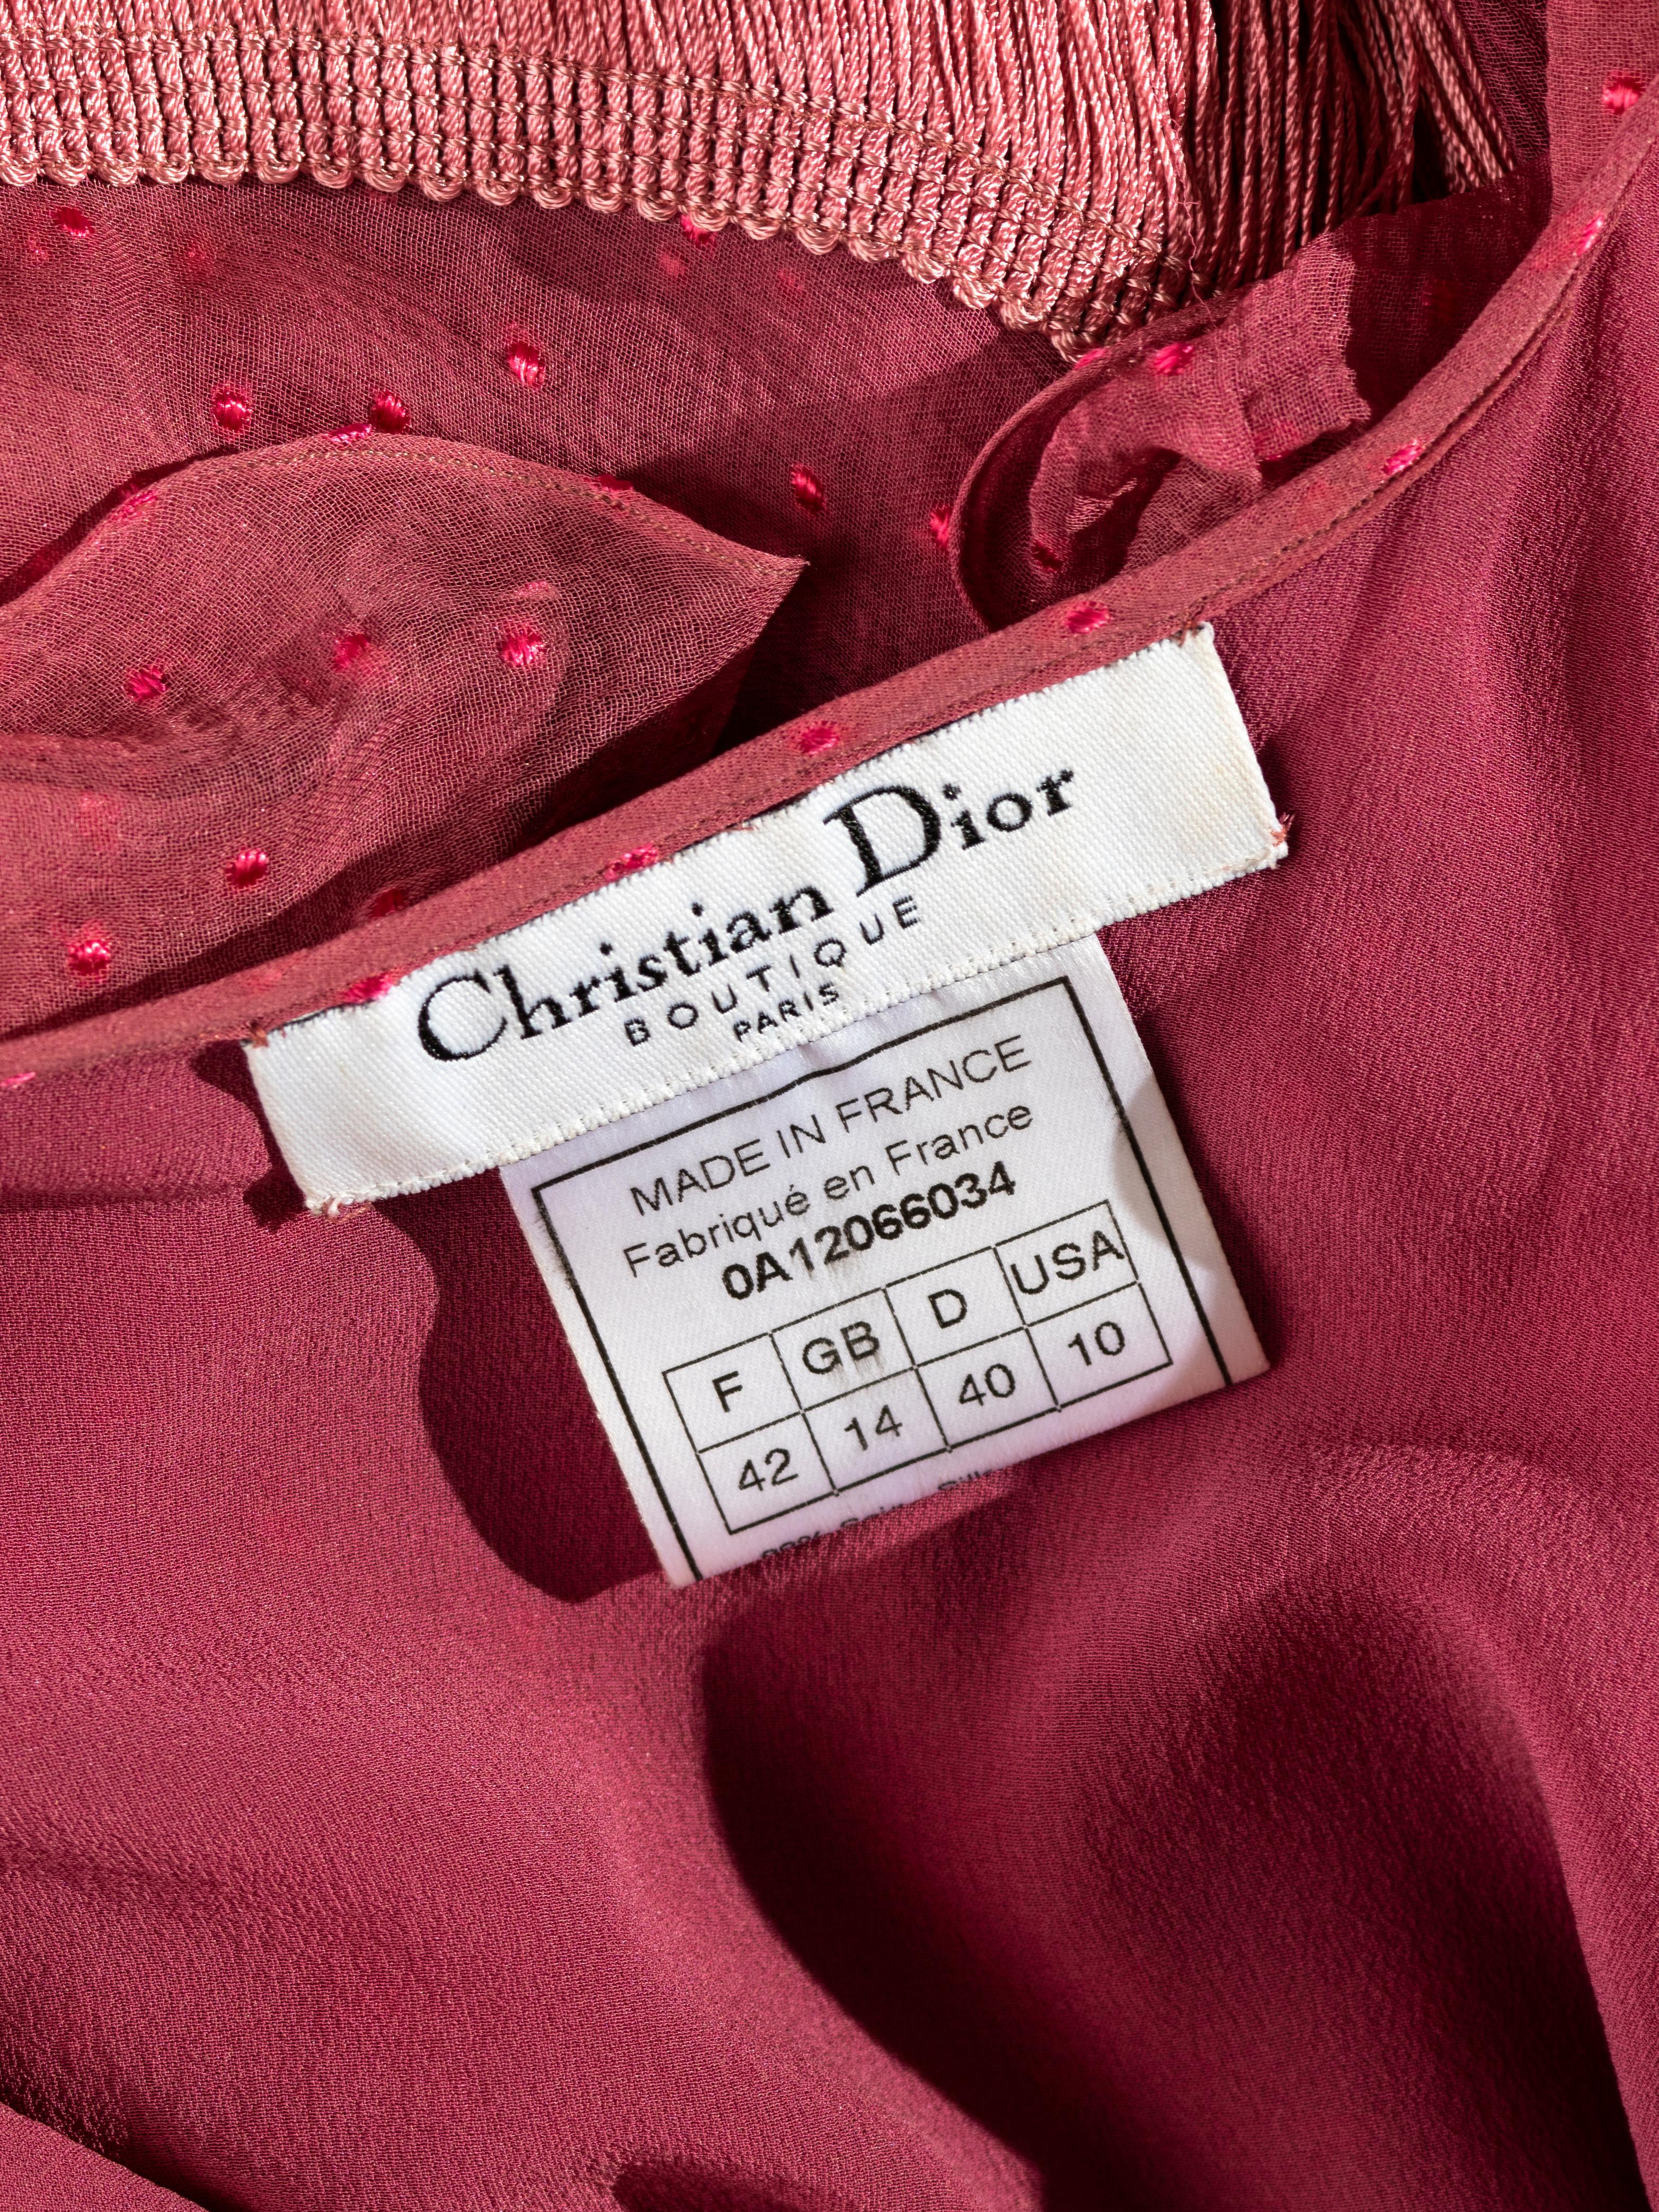 Christian Dior by John Galliano pink silk bias cut evening dress, fw 2000 4